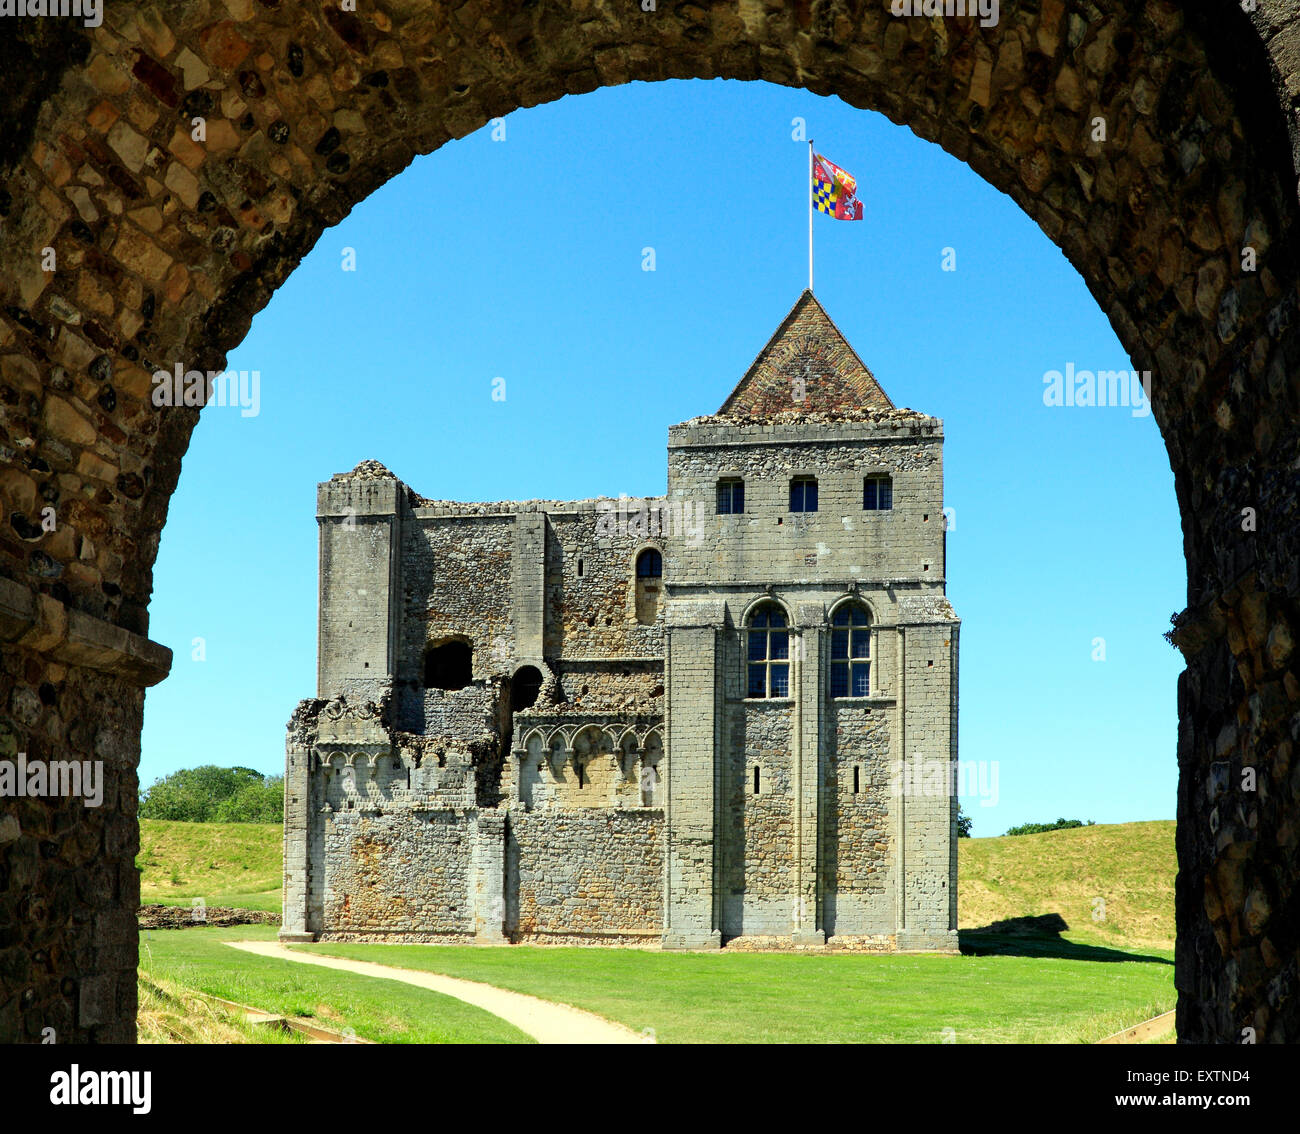 Castle Rising Castle through arch, 12th century Norman keep, Norfolk England UK English medieval castles Stock Photo